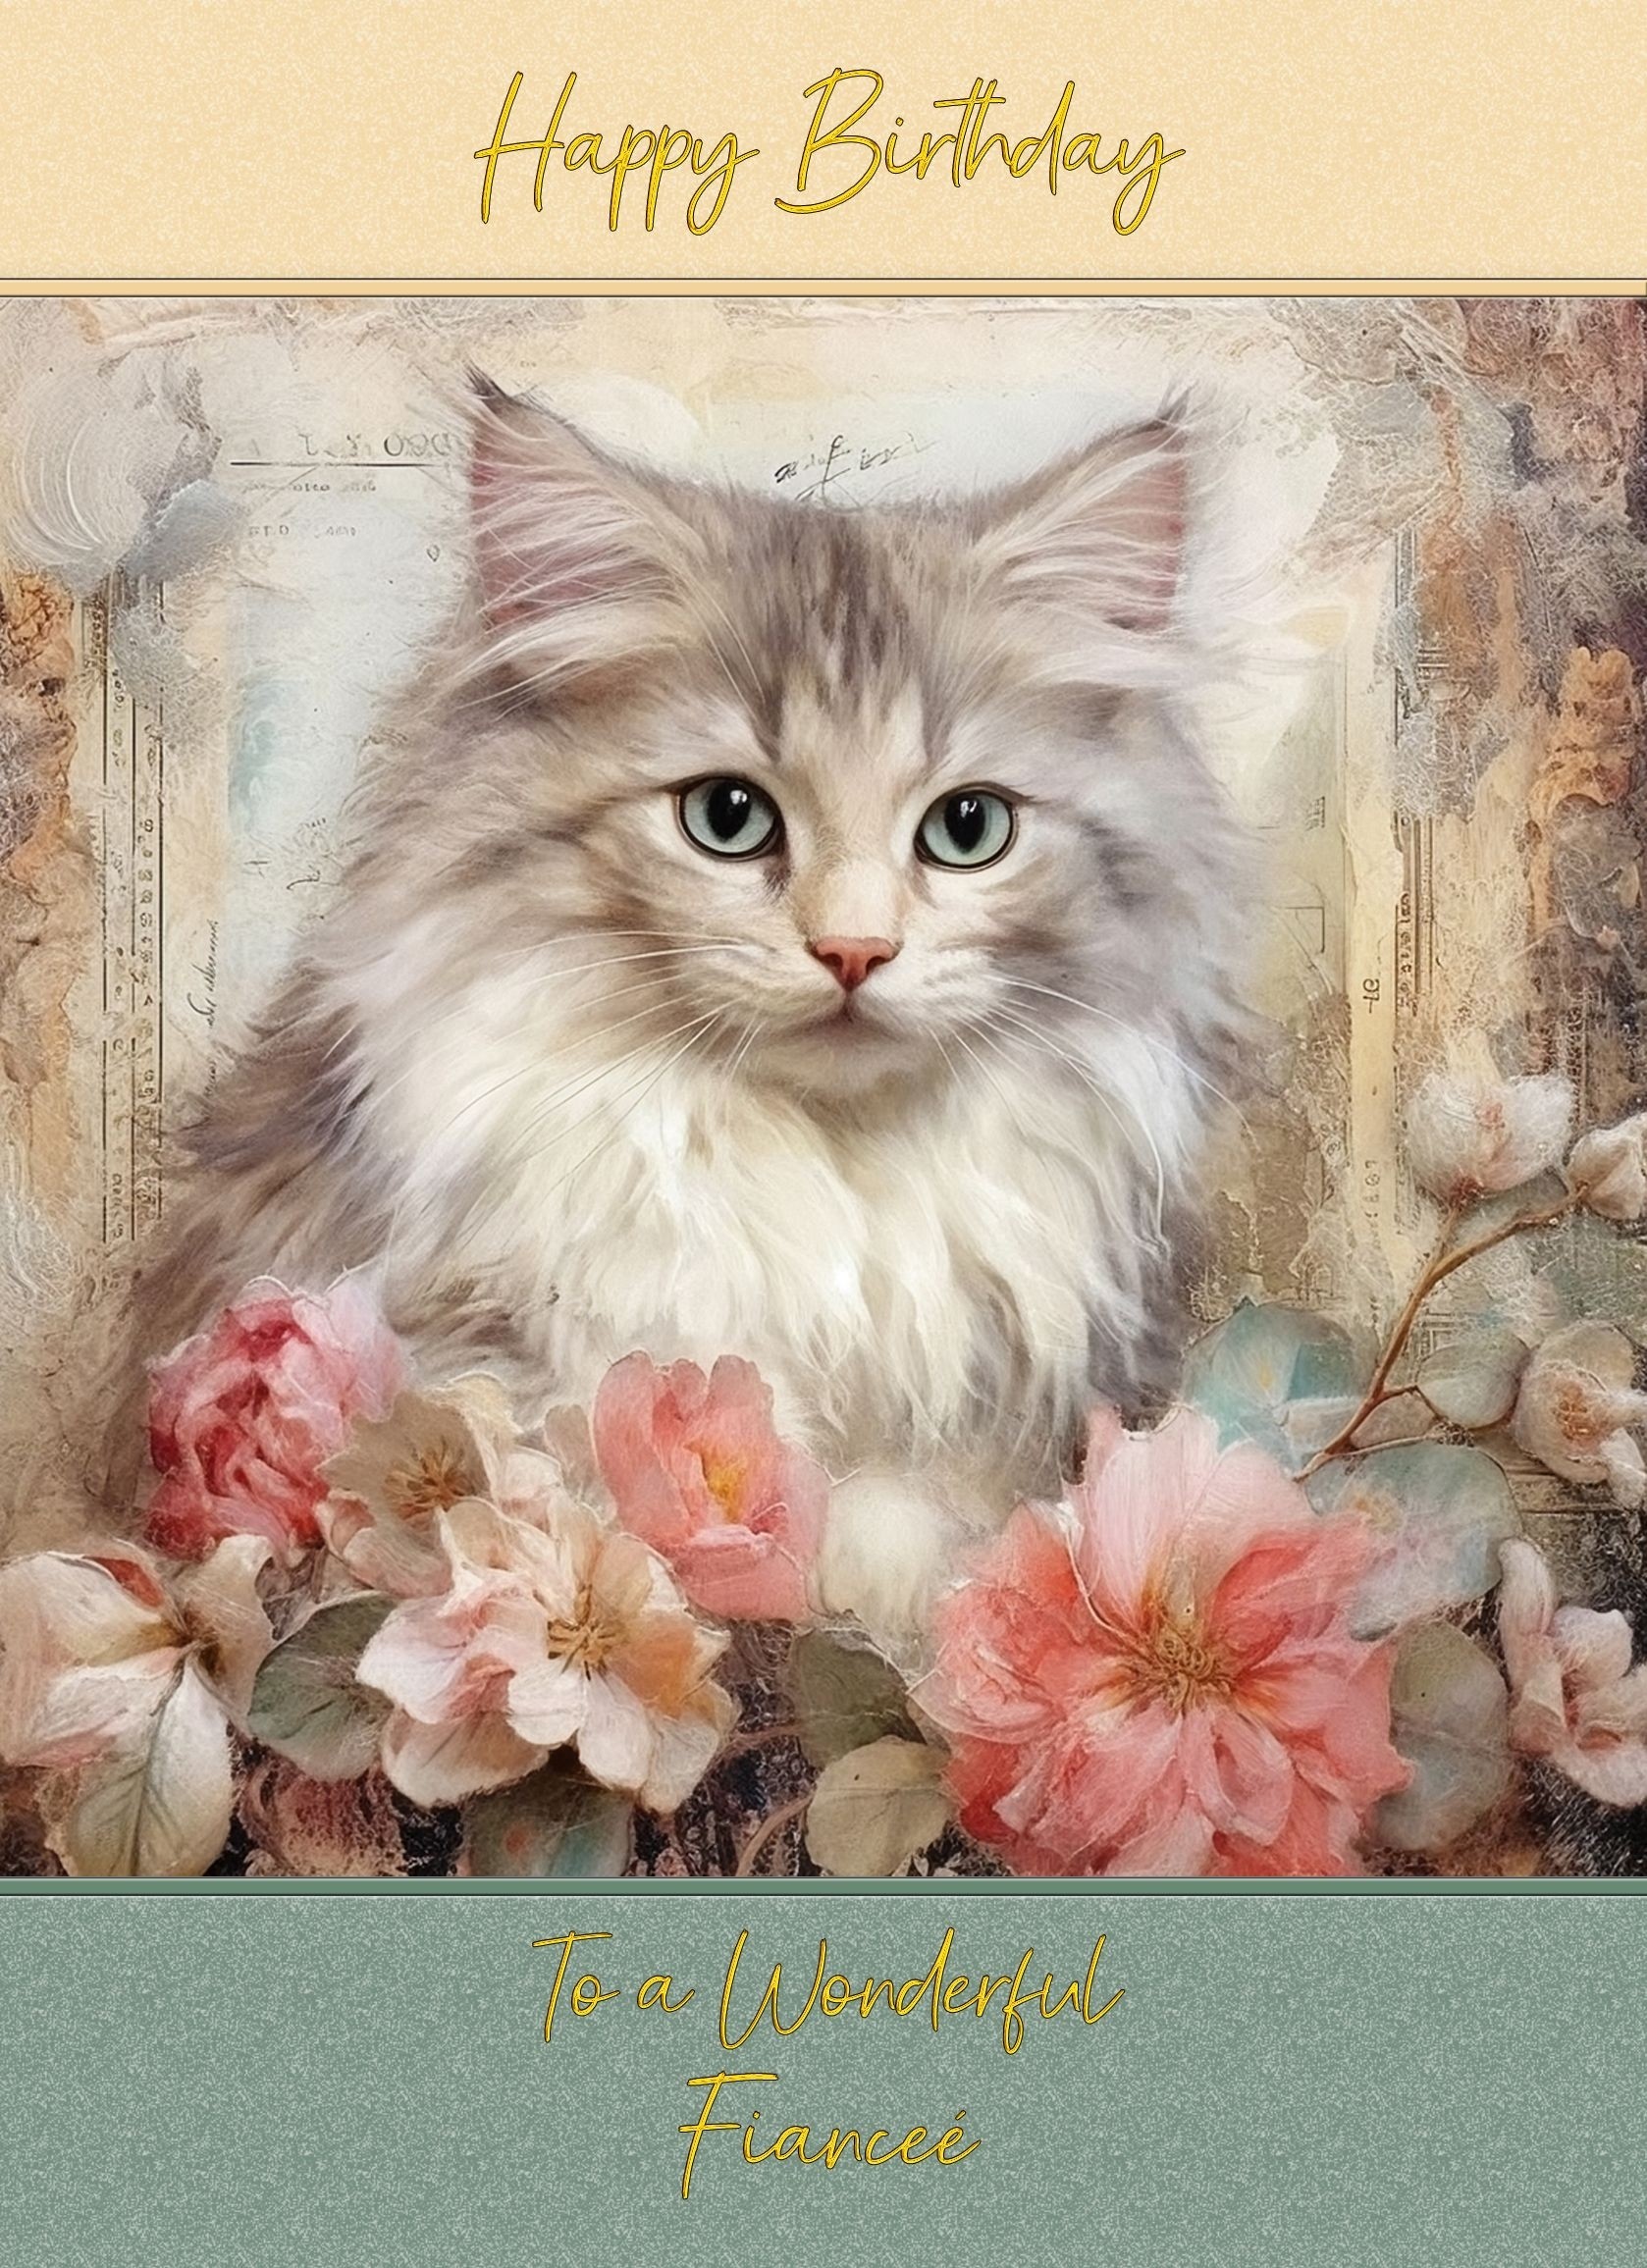 Cat Art Birthday Card for Fiancee (Design 4)